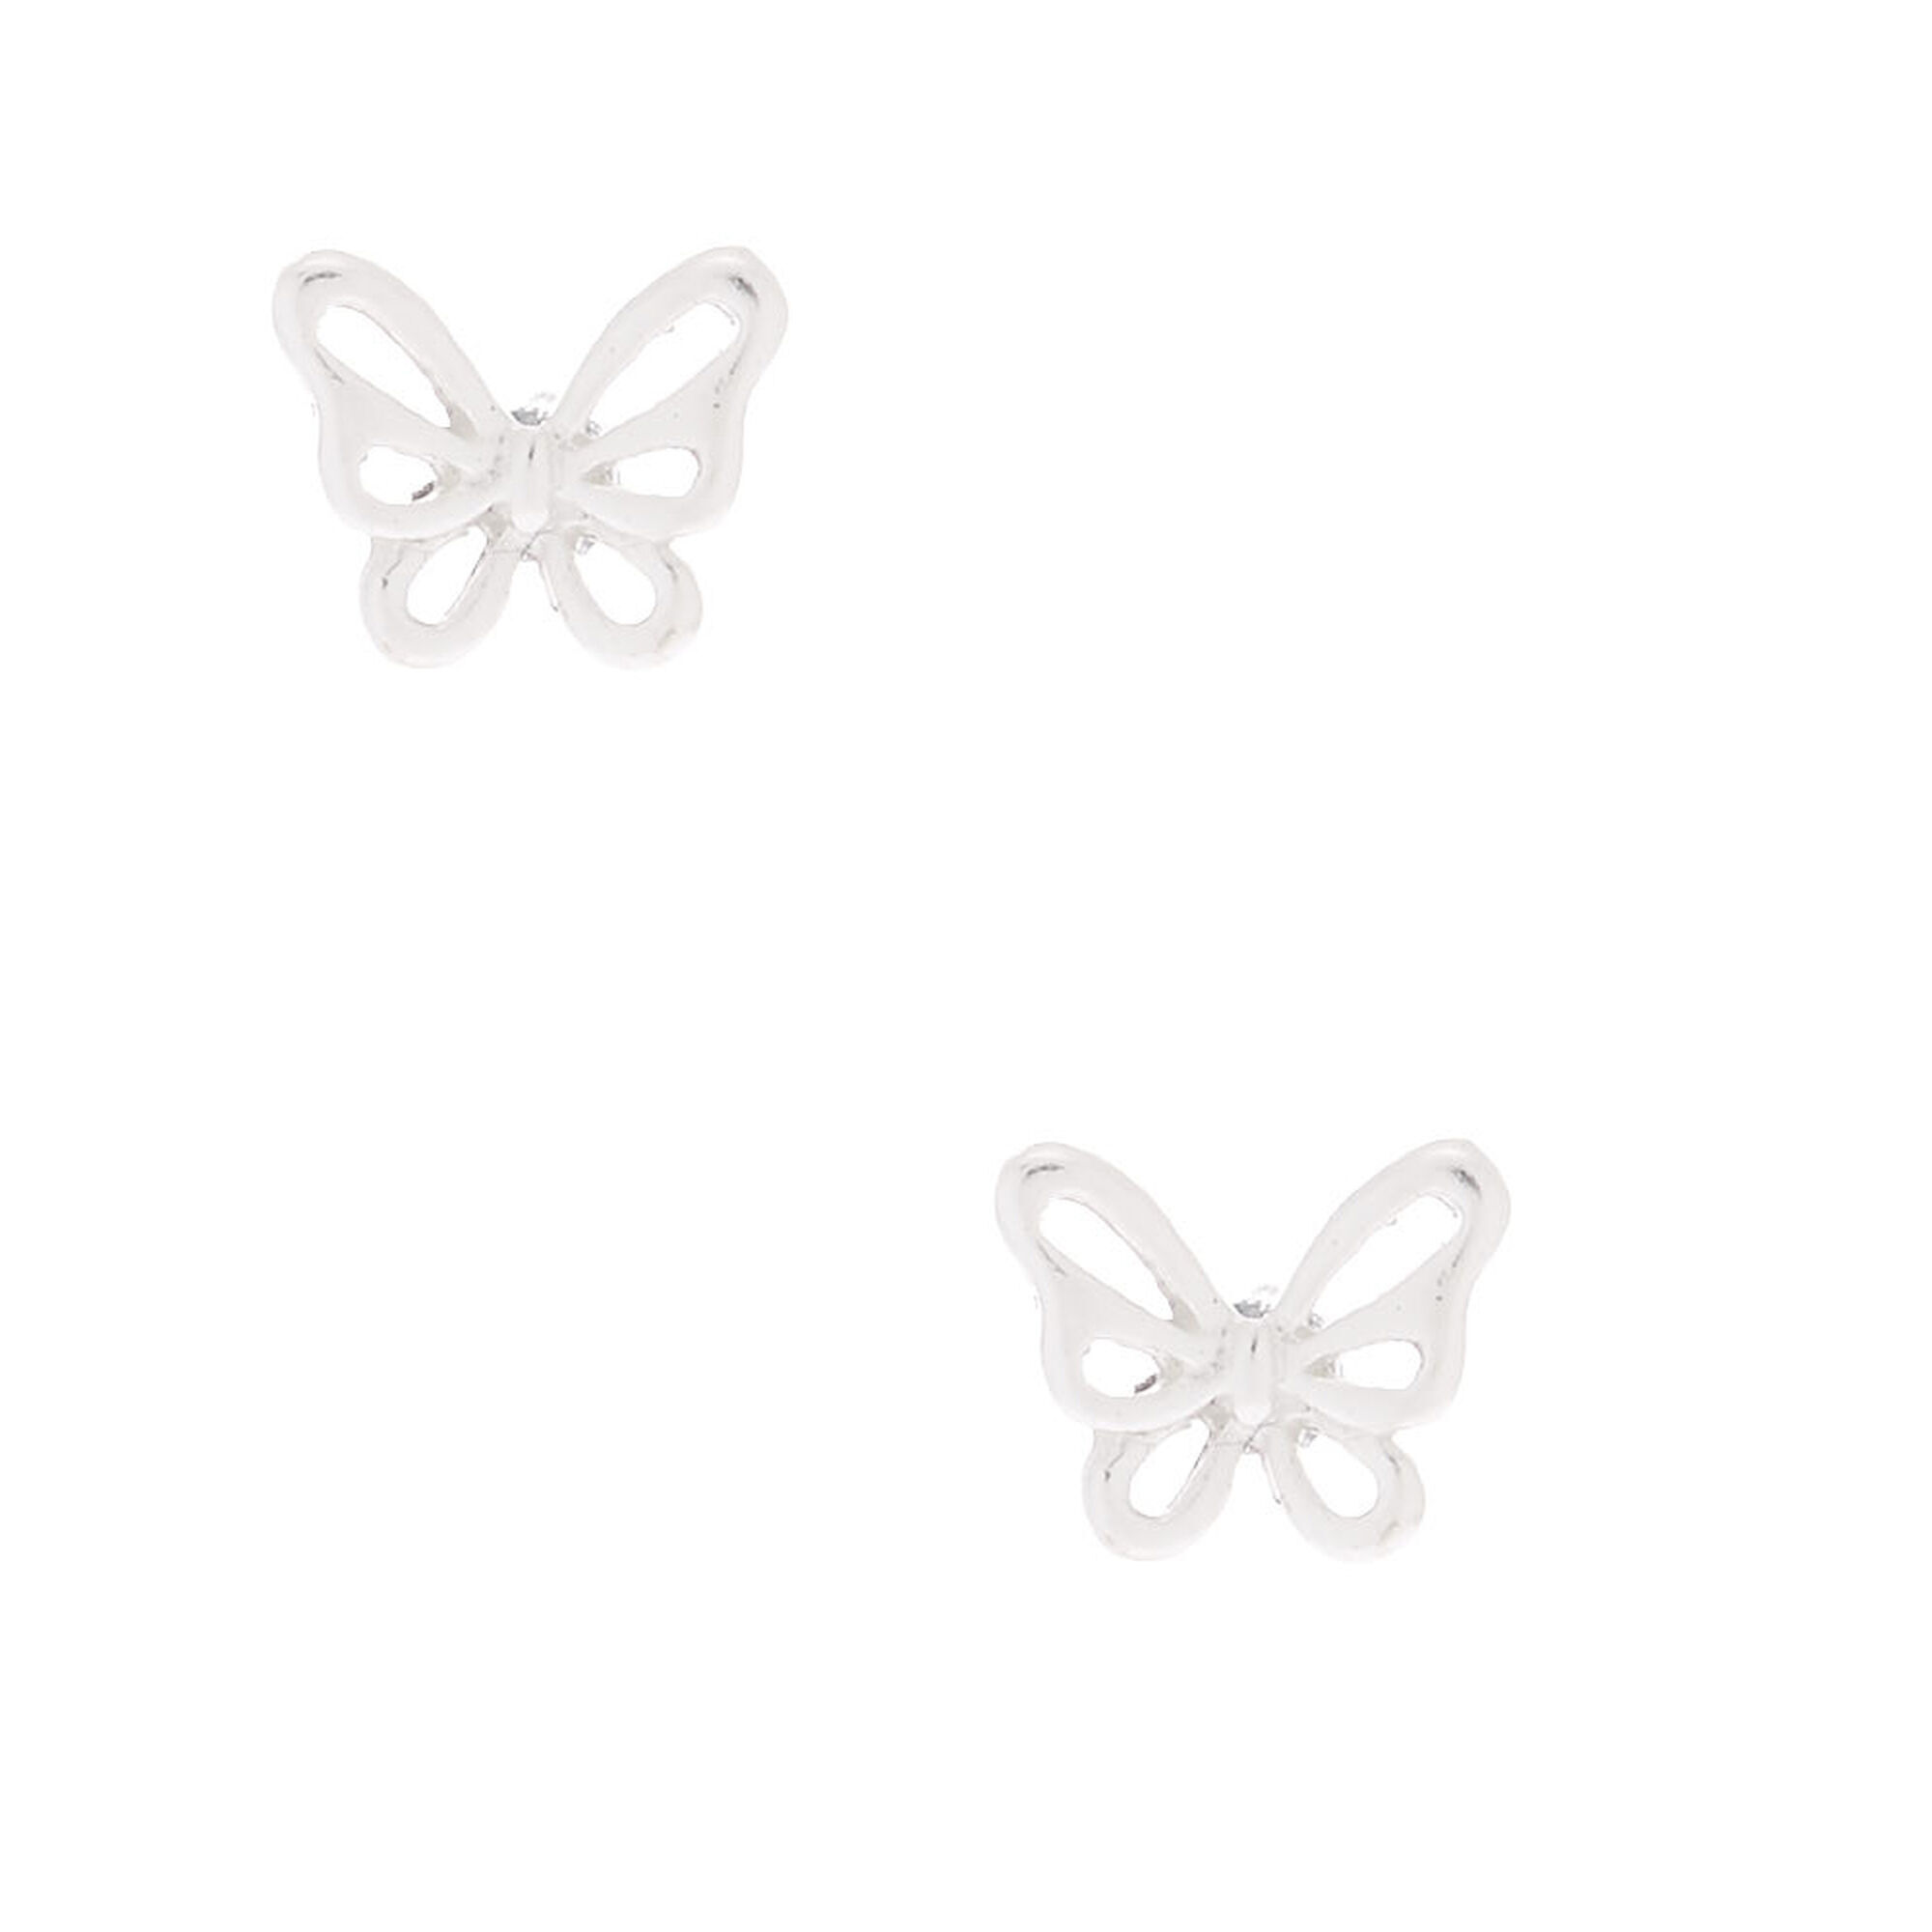 12 Packs: 120 ct. (1,440 total) Silver Butterfly Shape Earring